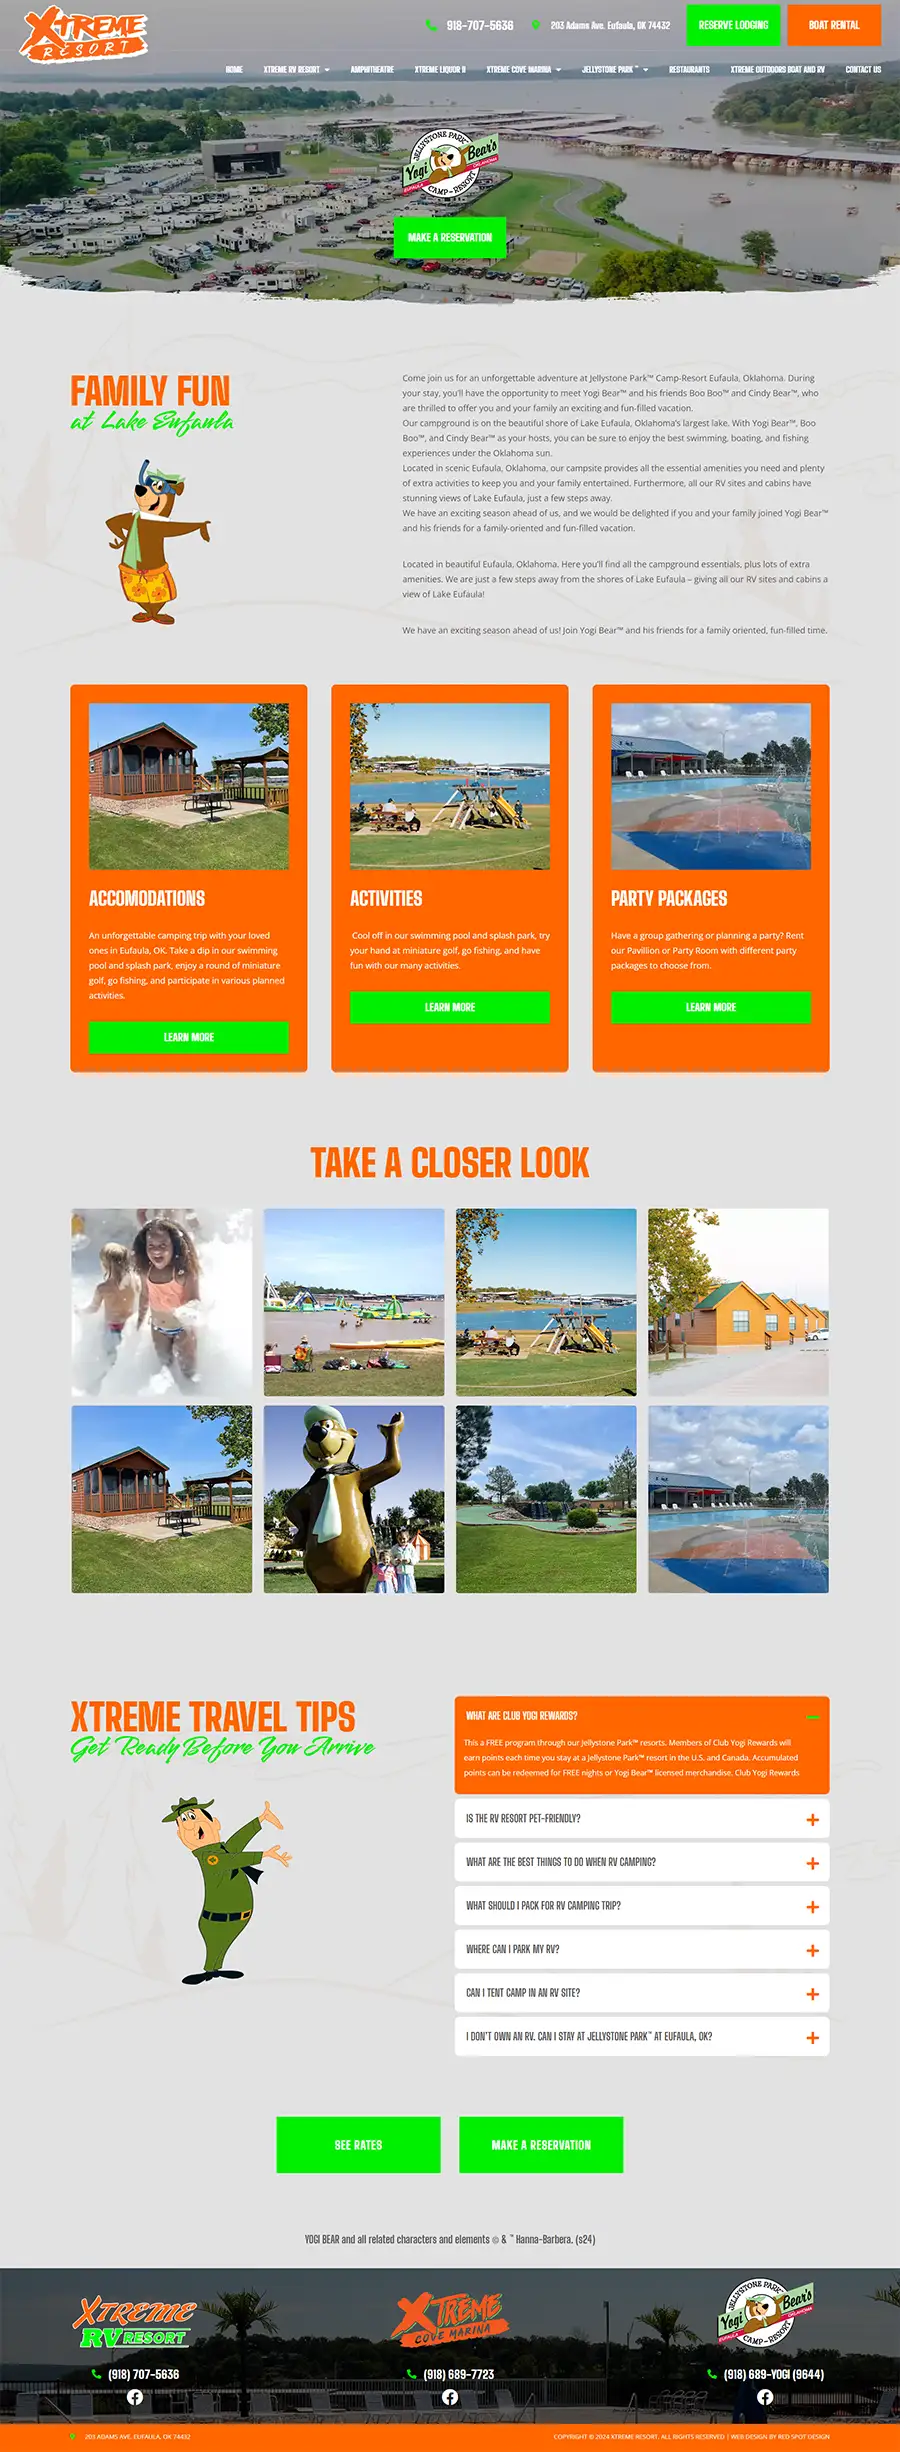 Jellystone Park Camp-Resort Eufaula, Oklahoma website design